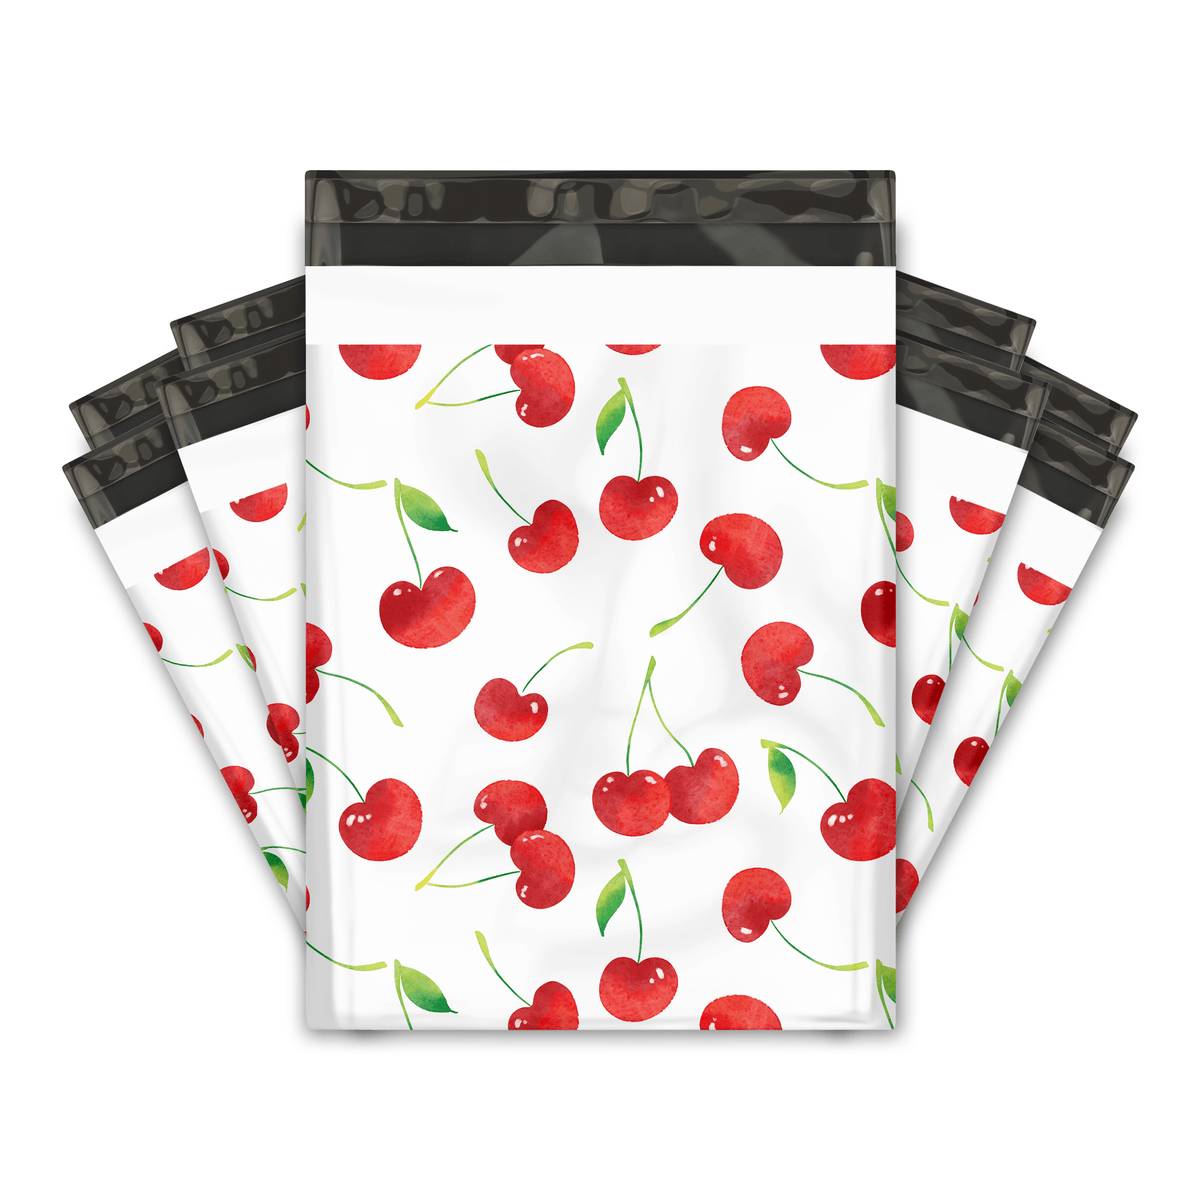 Cherries Designer Poly Mailers Shipping Envelopes Premium Printed Bags